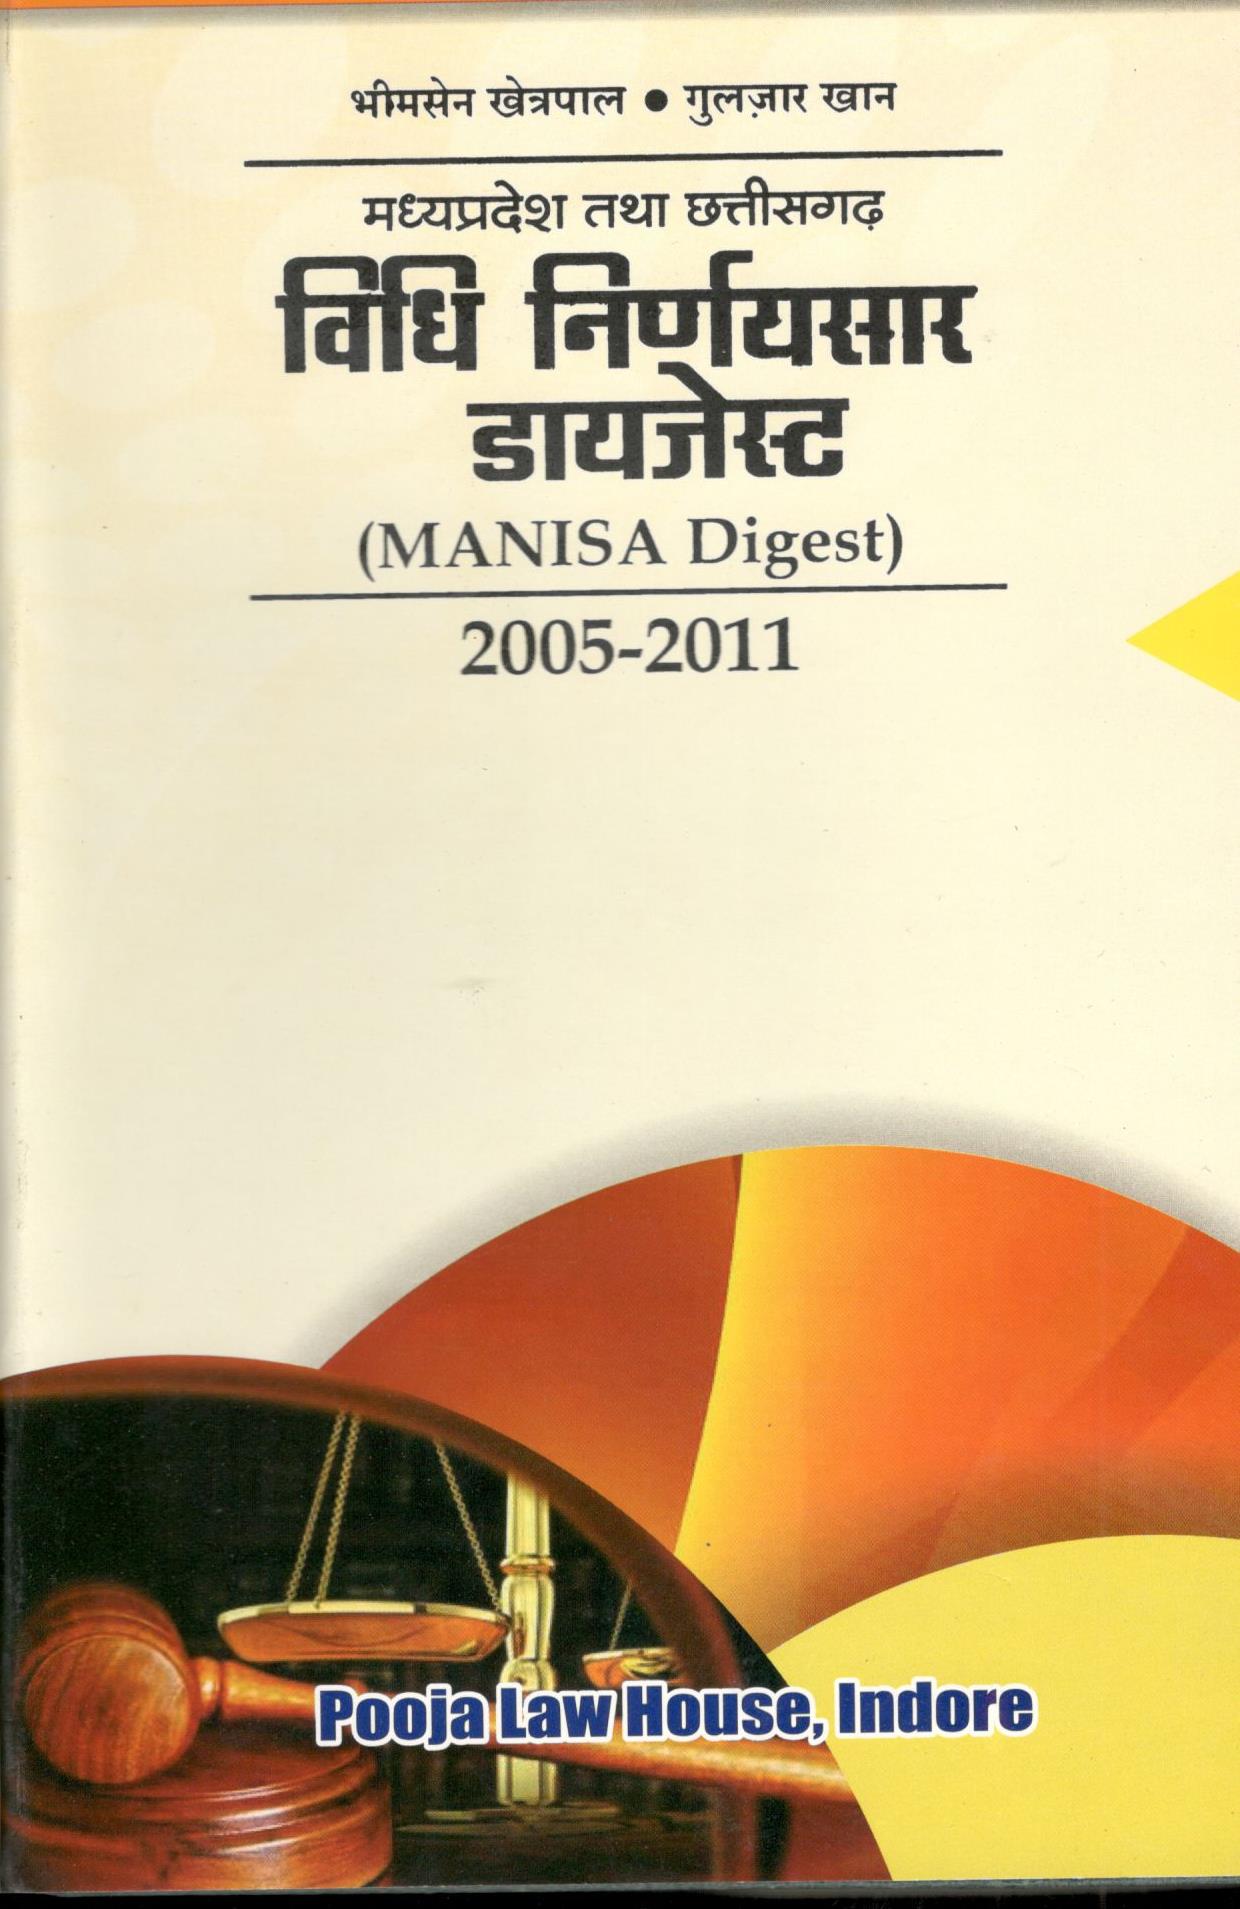  Buy गुलज़ार खान – मध्य प्रदेश/छत्तीसगढ़ विधि निर्णयसार डायजेस्ट (मनीसा डाइजेस्ट) (2005-2011) / Madhya Pradesh/Chhattisgarh VNS Digest (2005-2011)